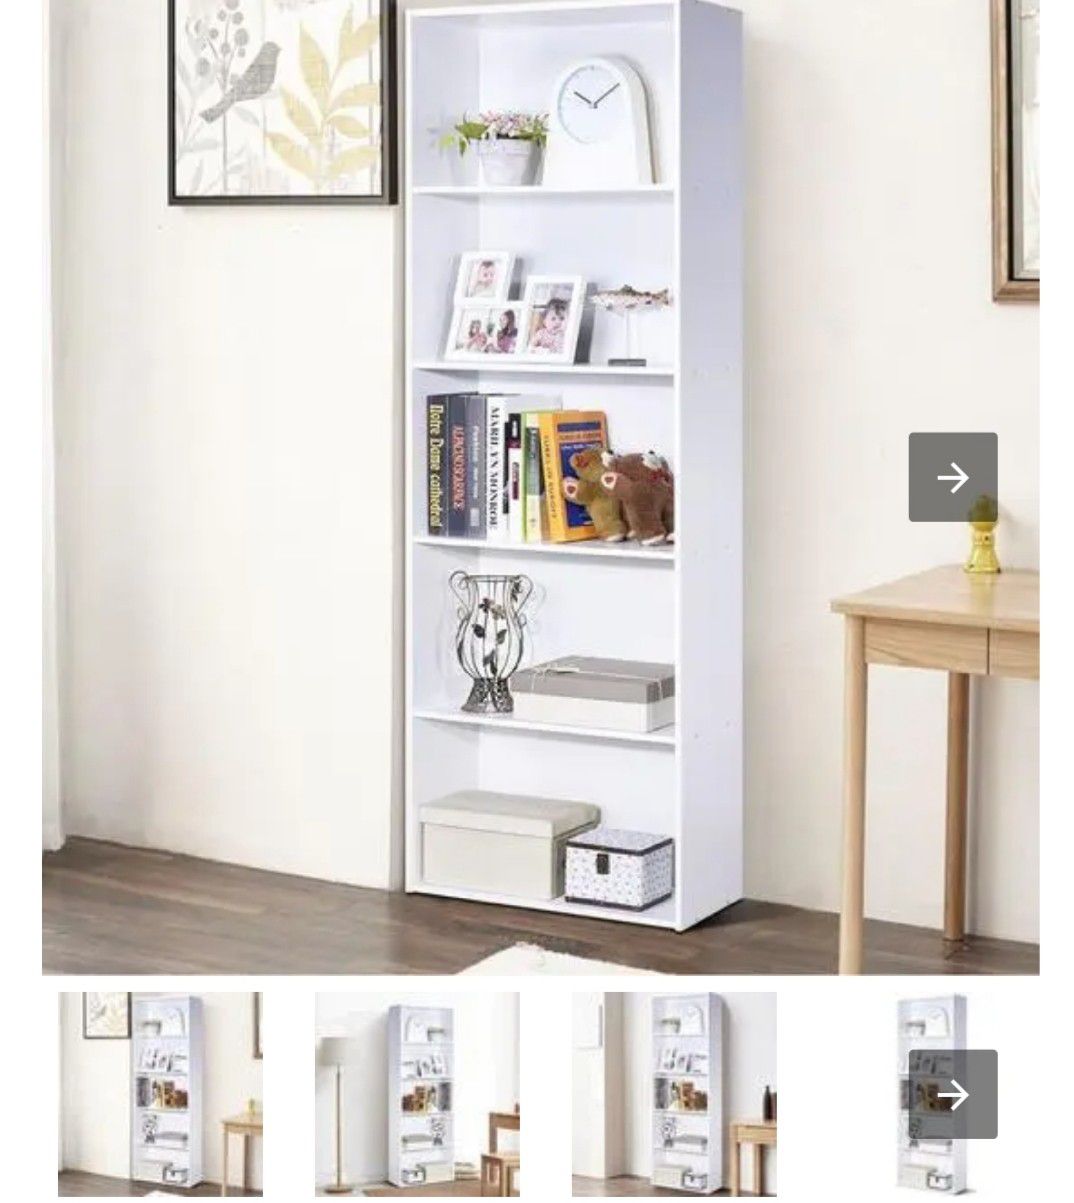 Bookshelve/organizer